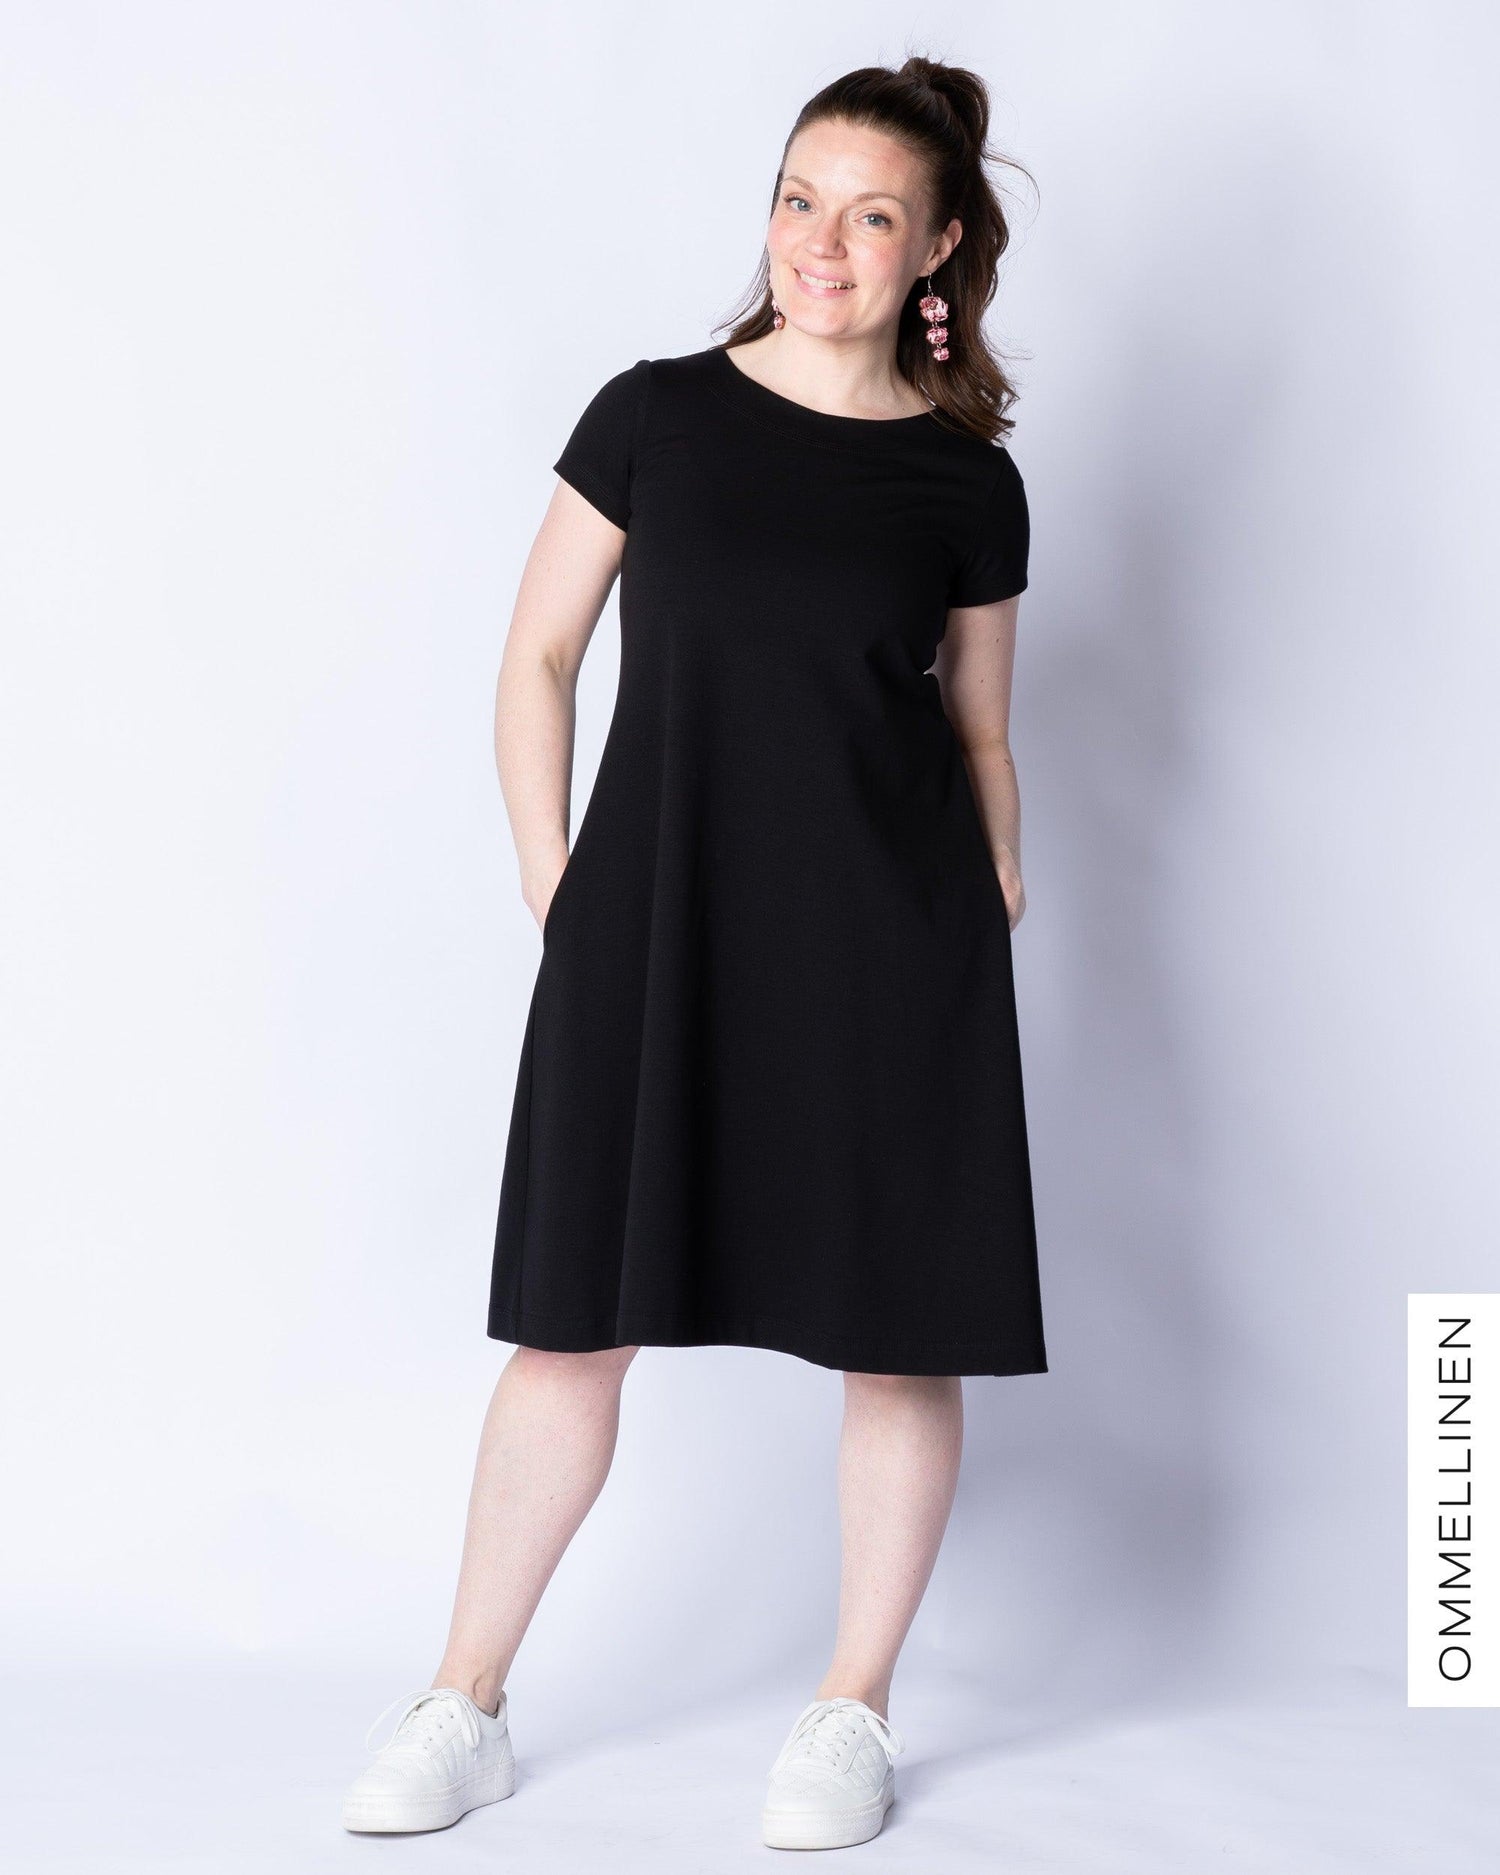 DRESS tunic - short sleeve, black